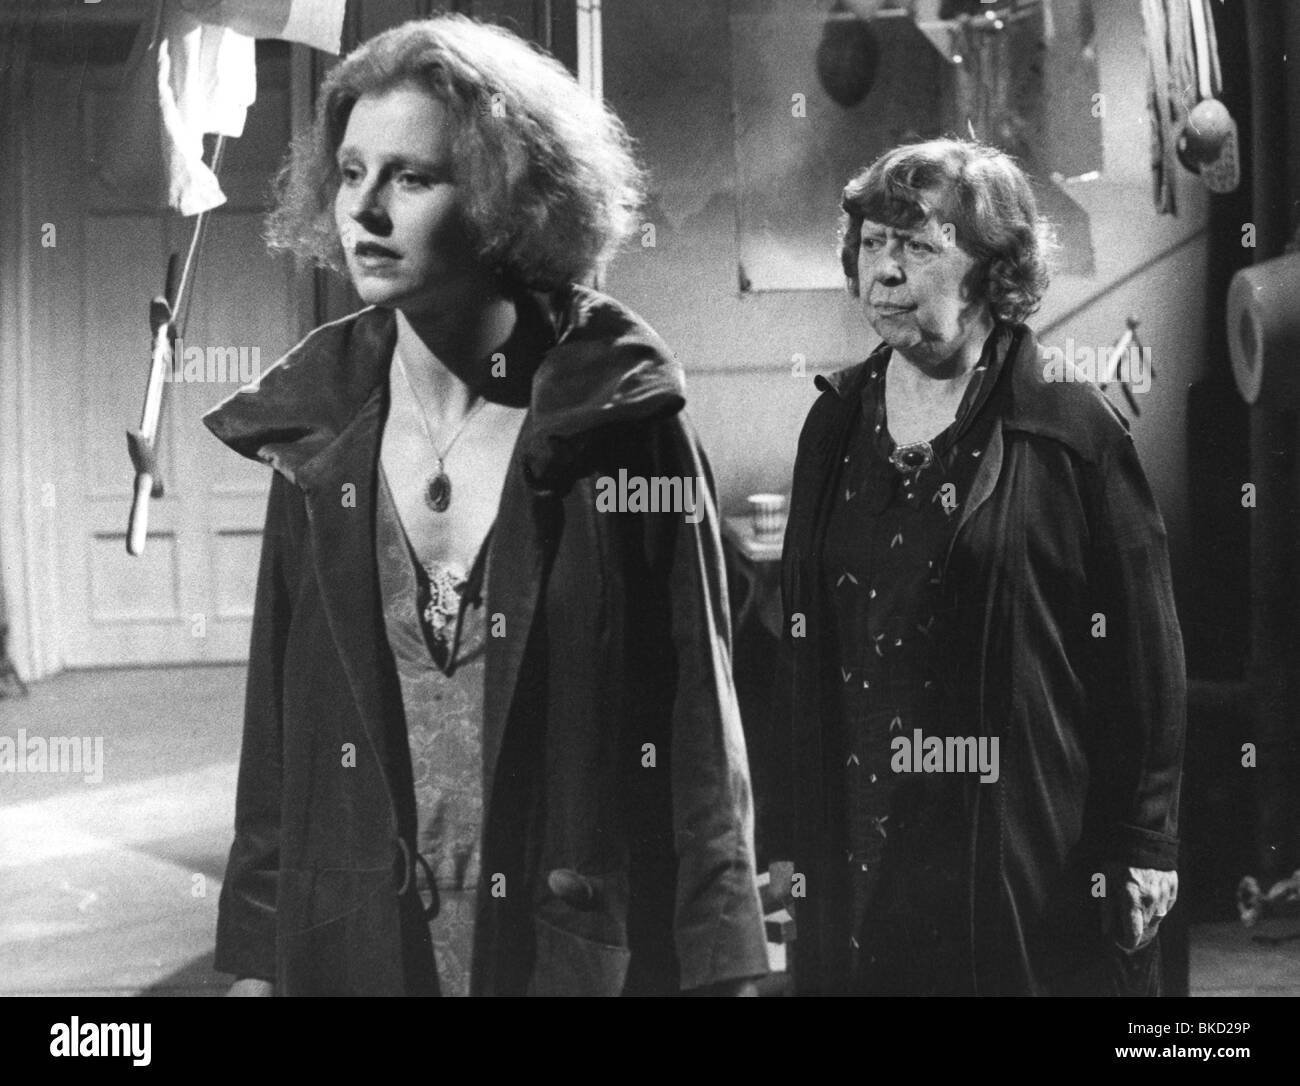 Schygulla, Hanna, * 25.12.1943, actrice allemande, demi-longueur, avec Brigitte Mira dans le film "Berlin Alexanderplatz", par Rainer Werner Fassbinder, DEU 1980, Banque D'Images